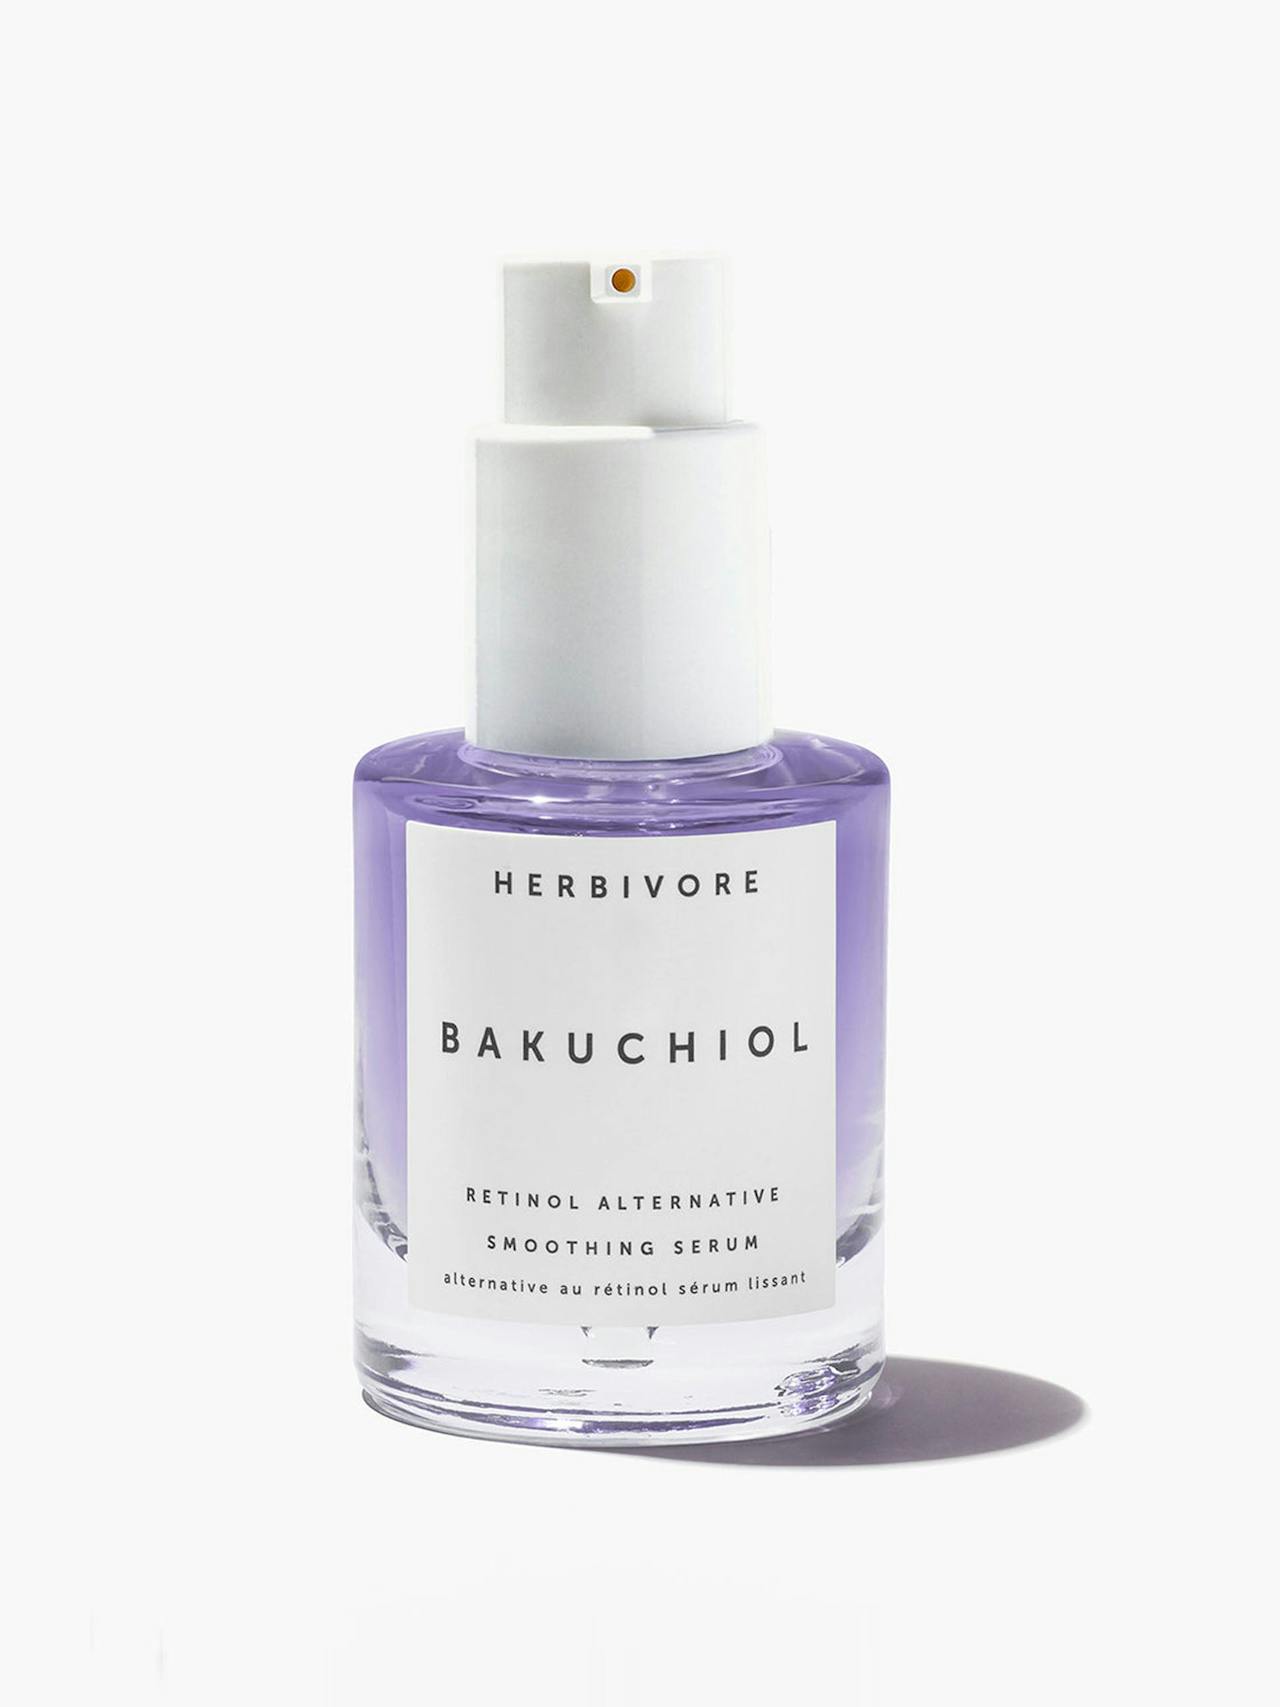 Bakuchiol retinol alternative smoothing serum